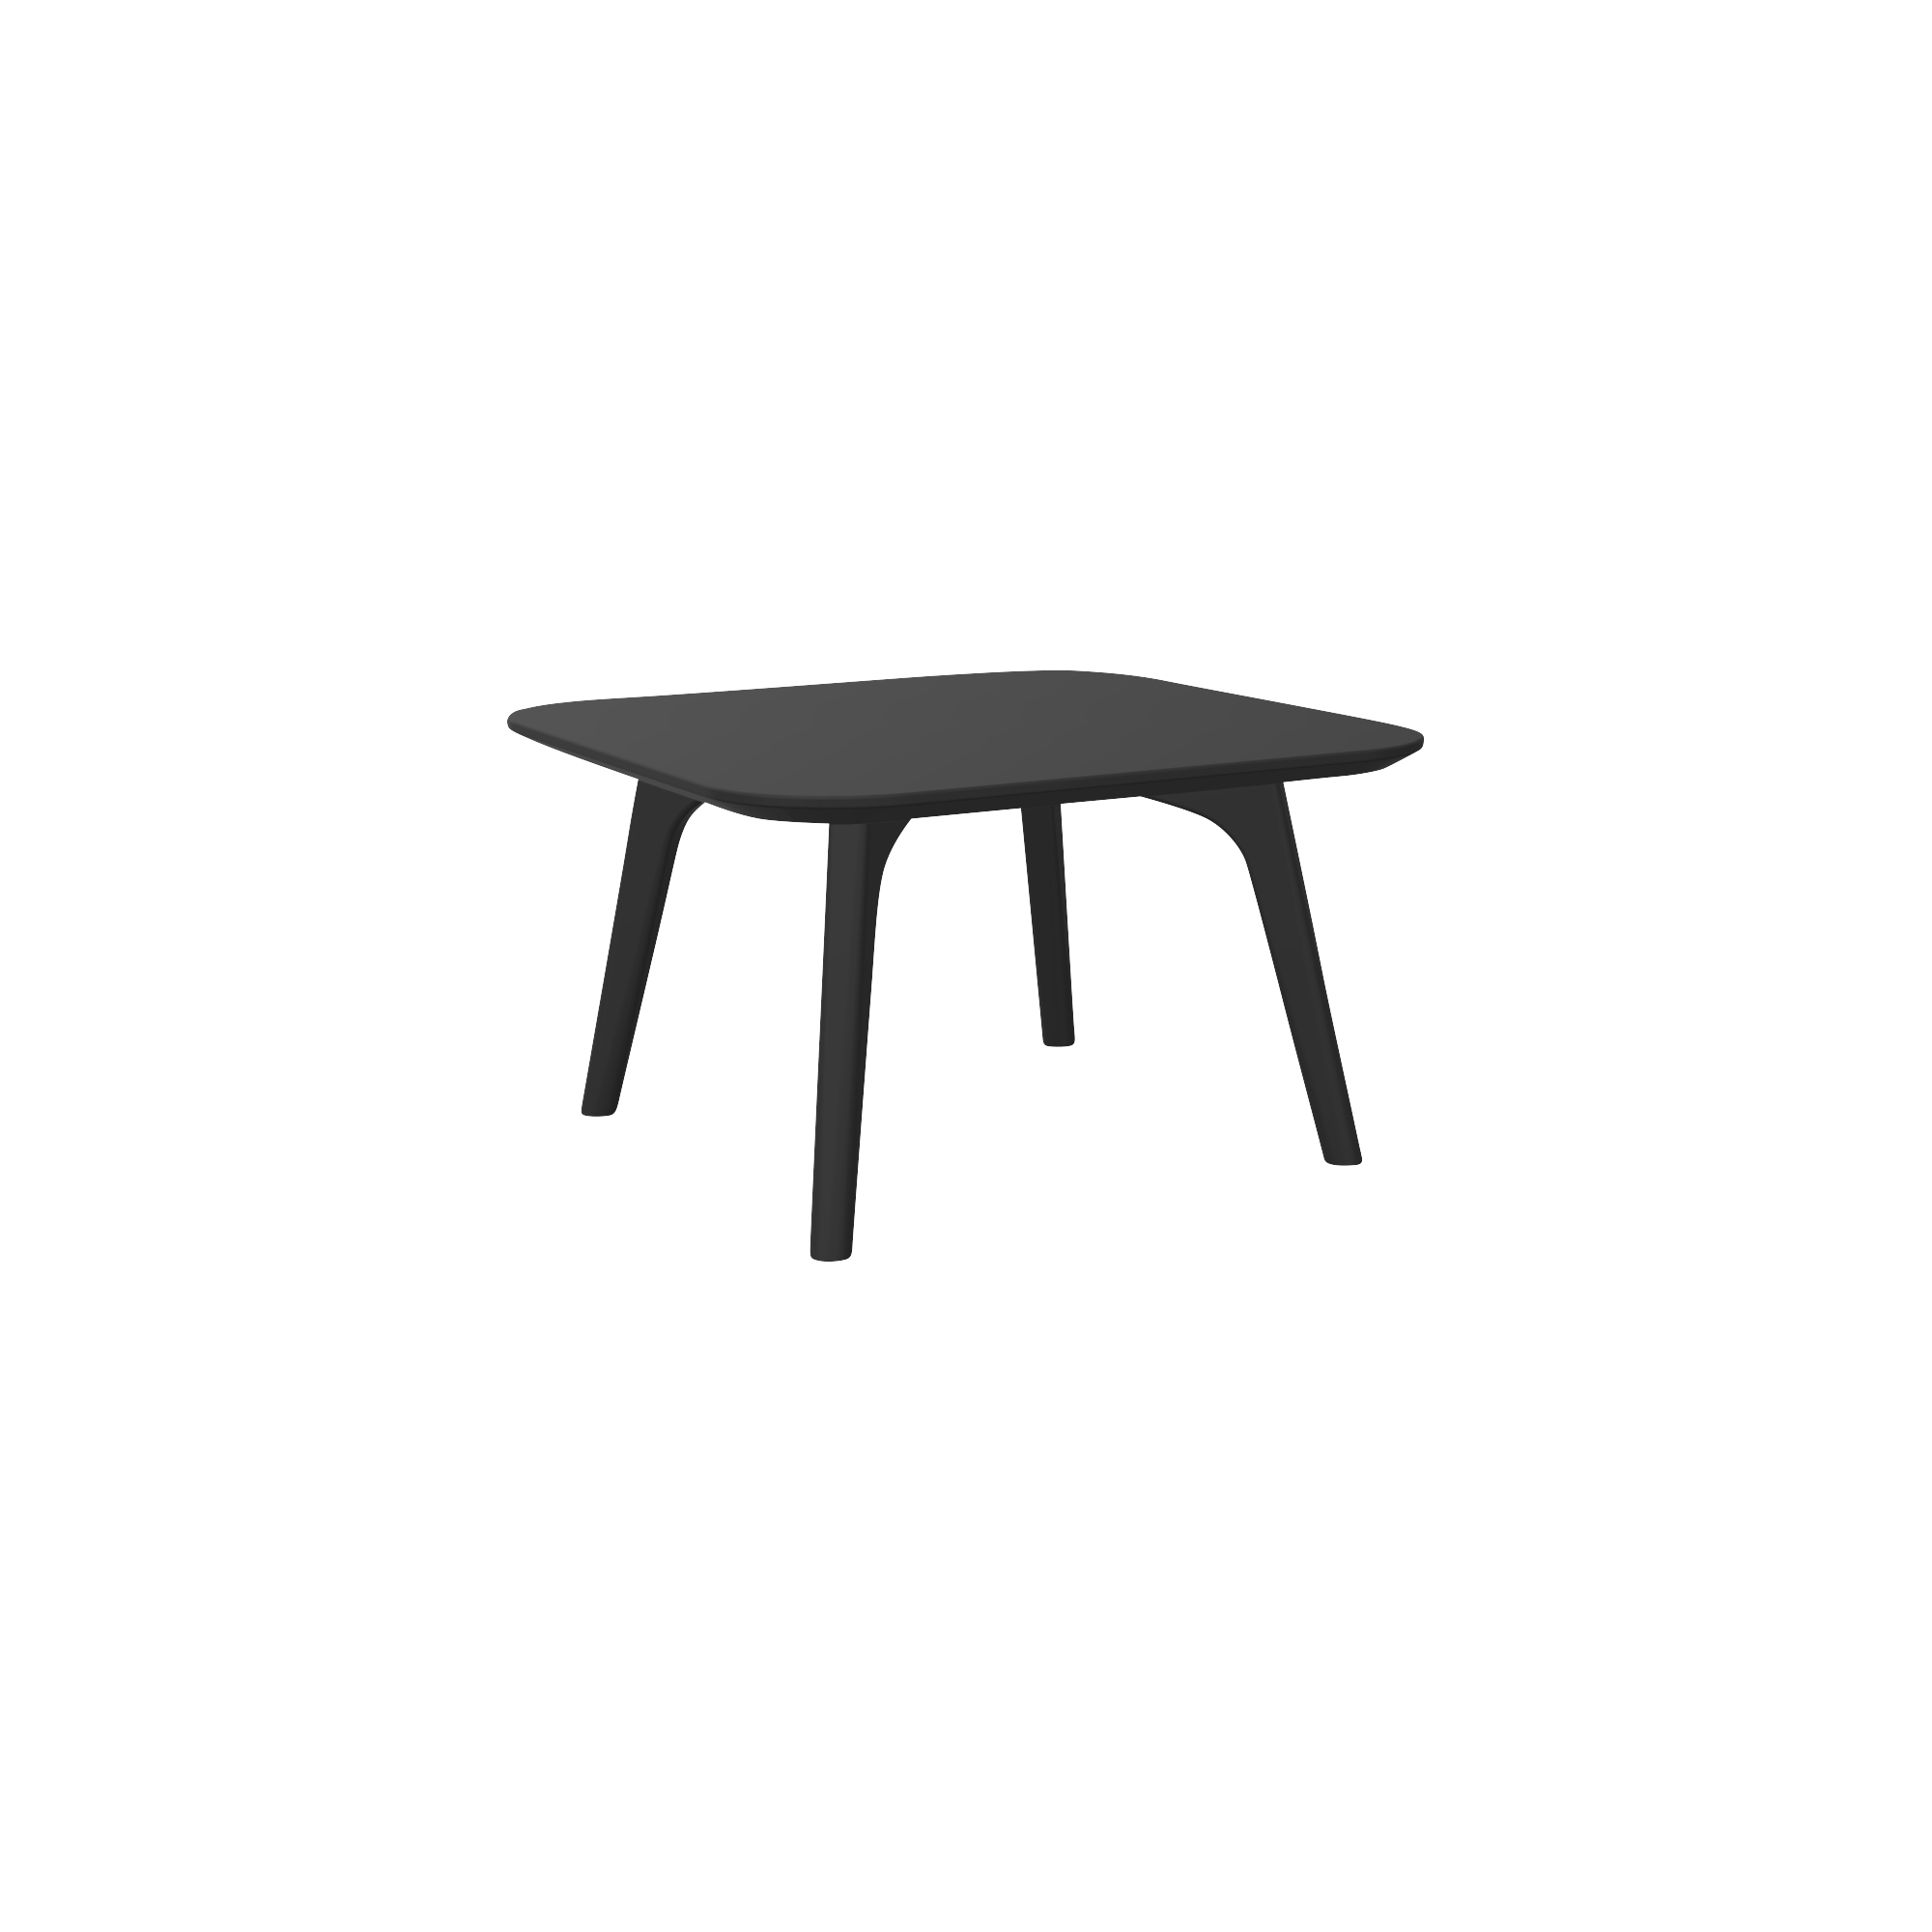 A black square table